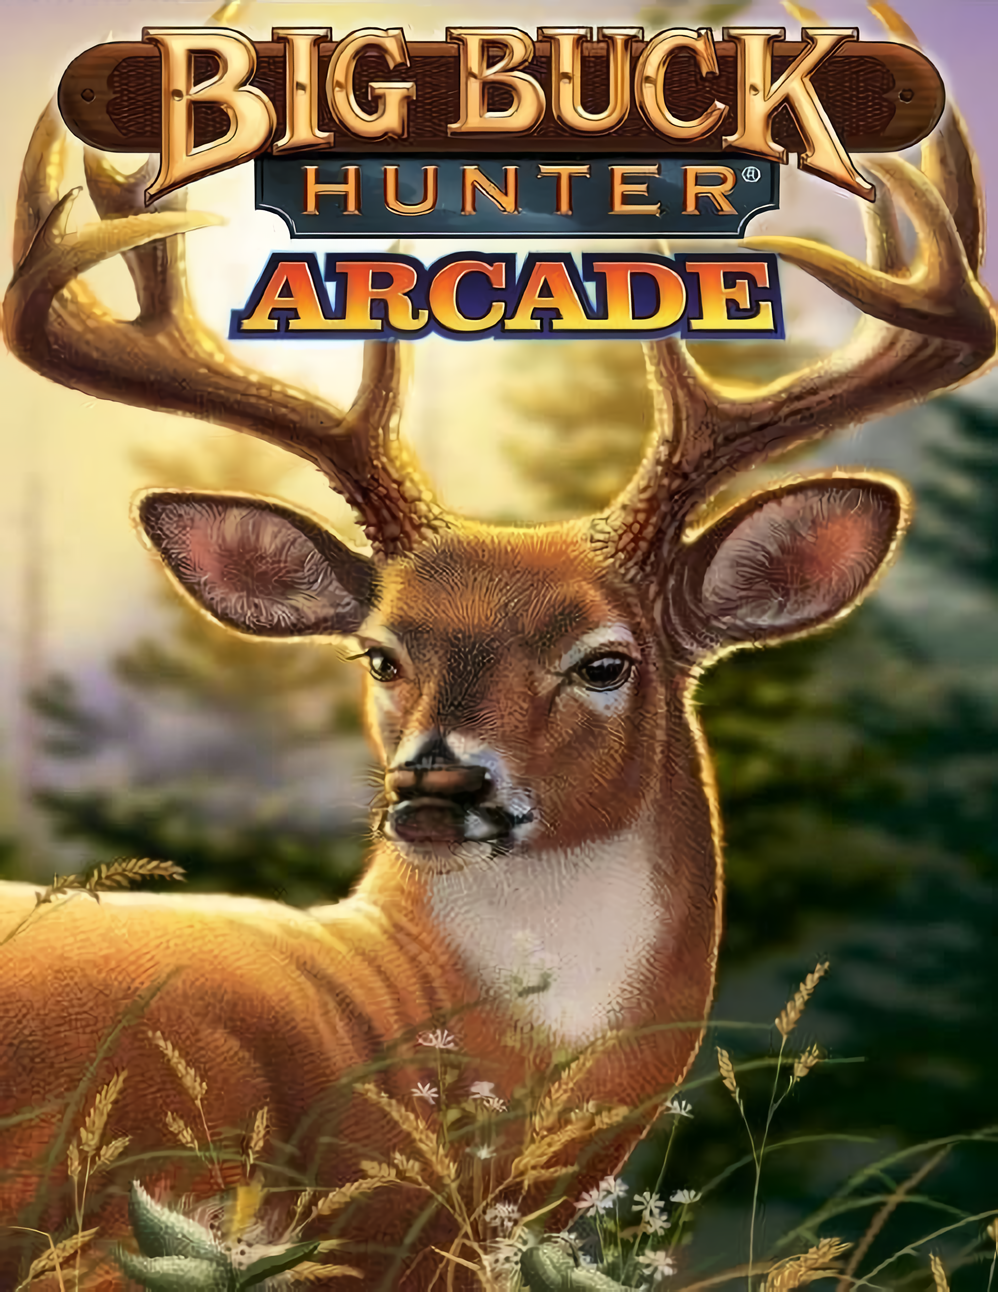 Big Buck Hunter Arcade [PC, Цифровая версия] (Цифровая версия) цена и фото